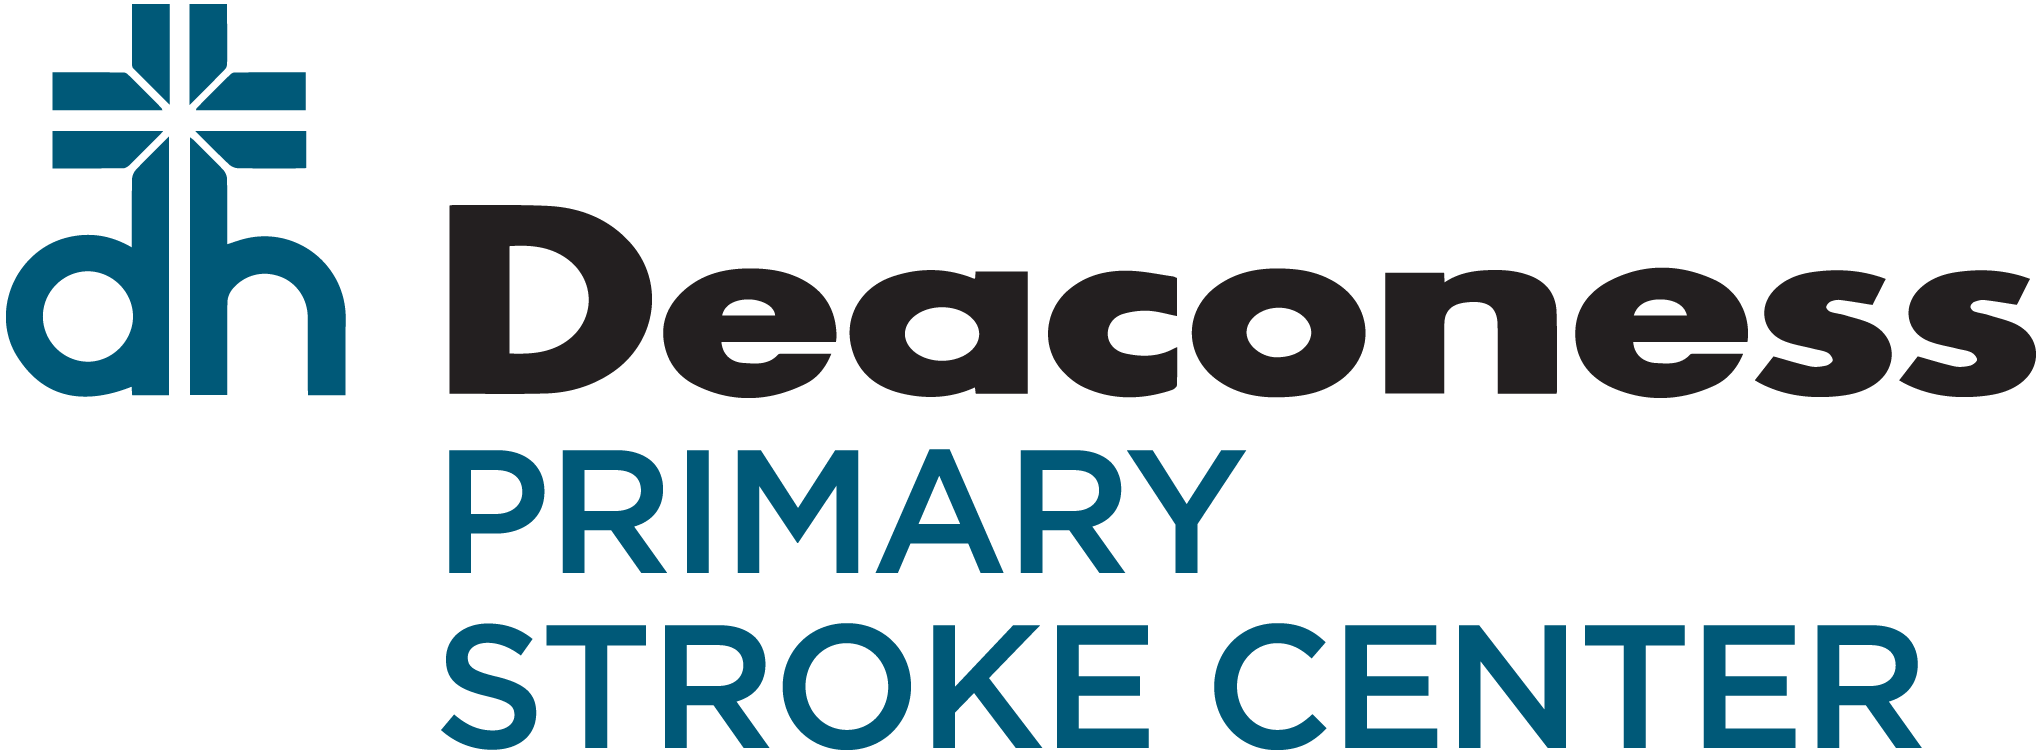 Deaconess Primary Stroke Center